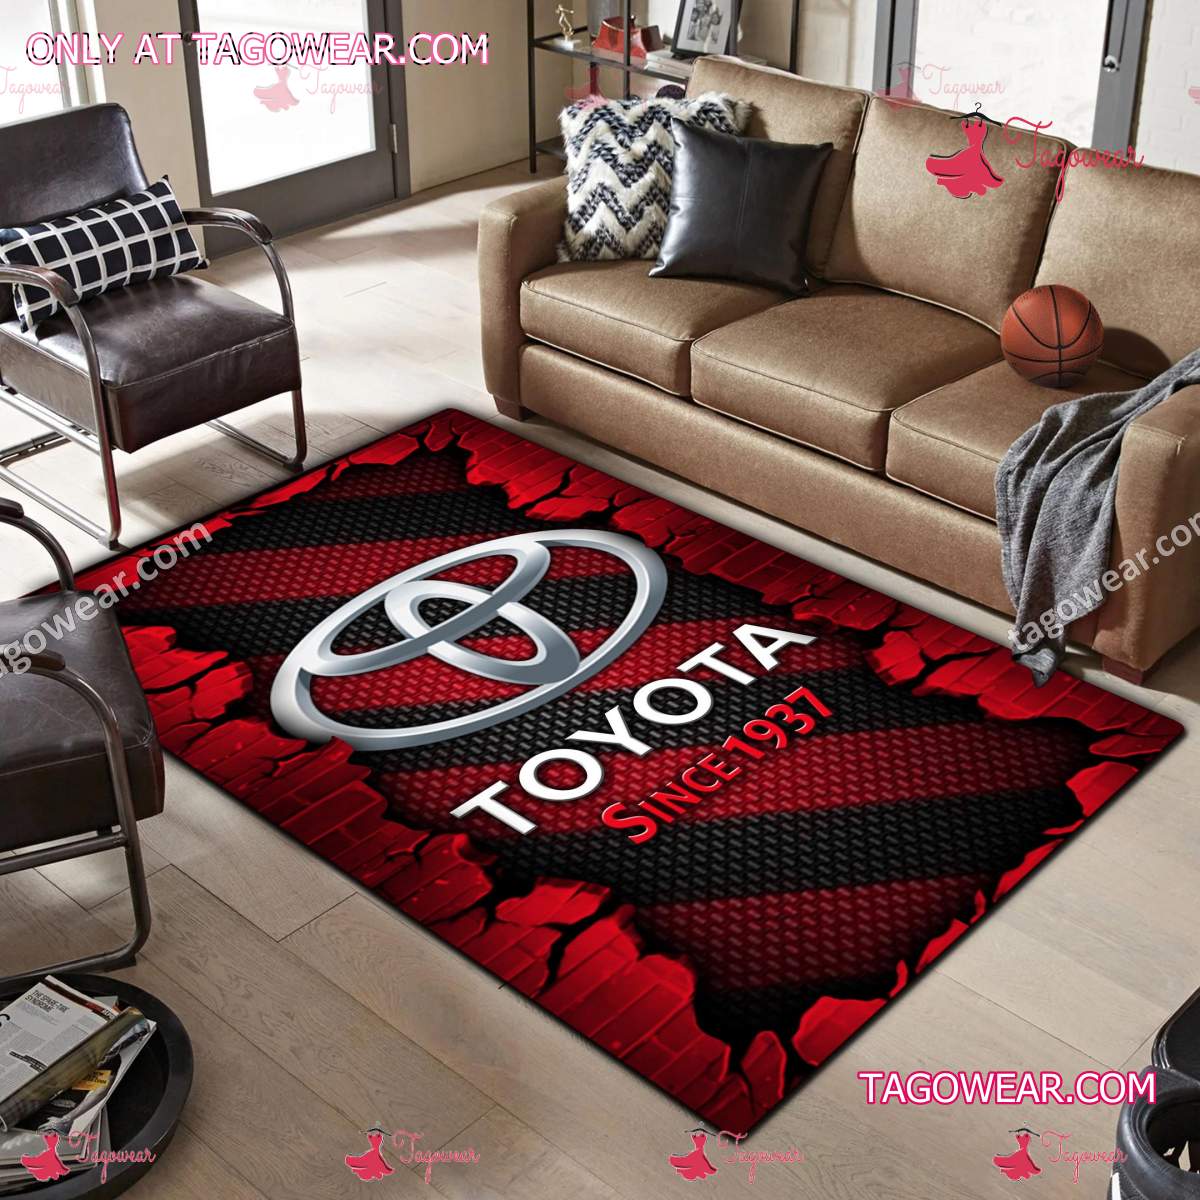 Toyota Since 1937 Rug Carpet a